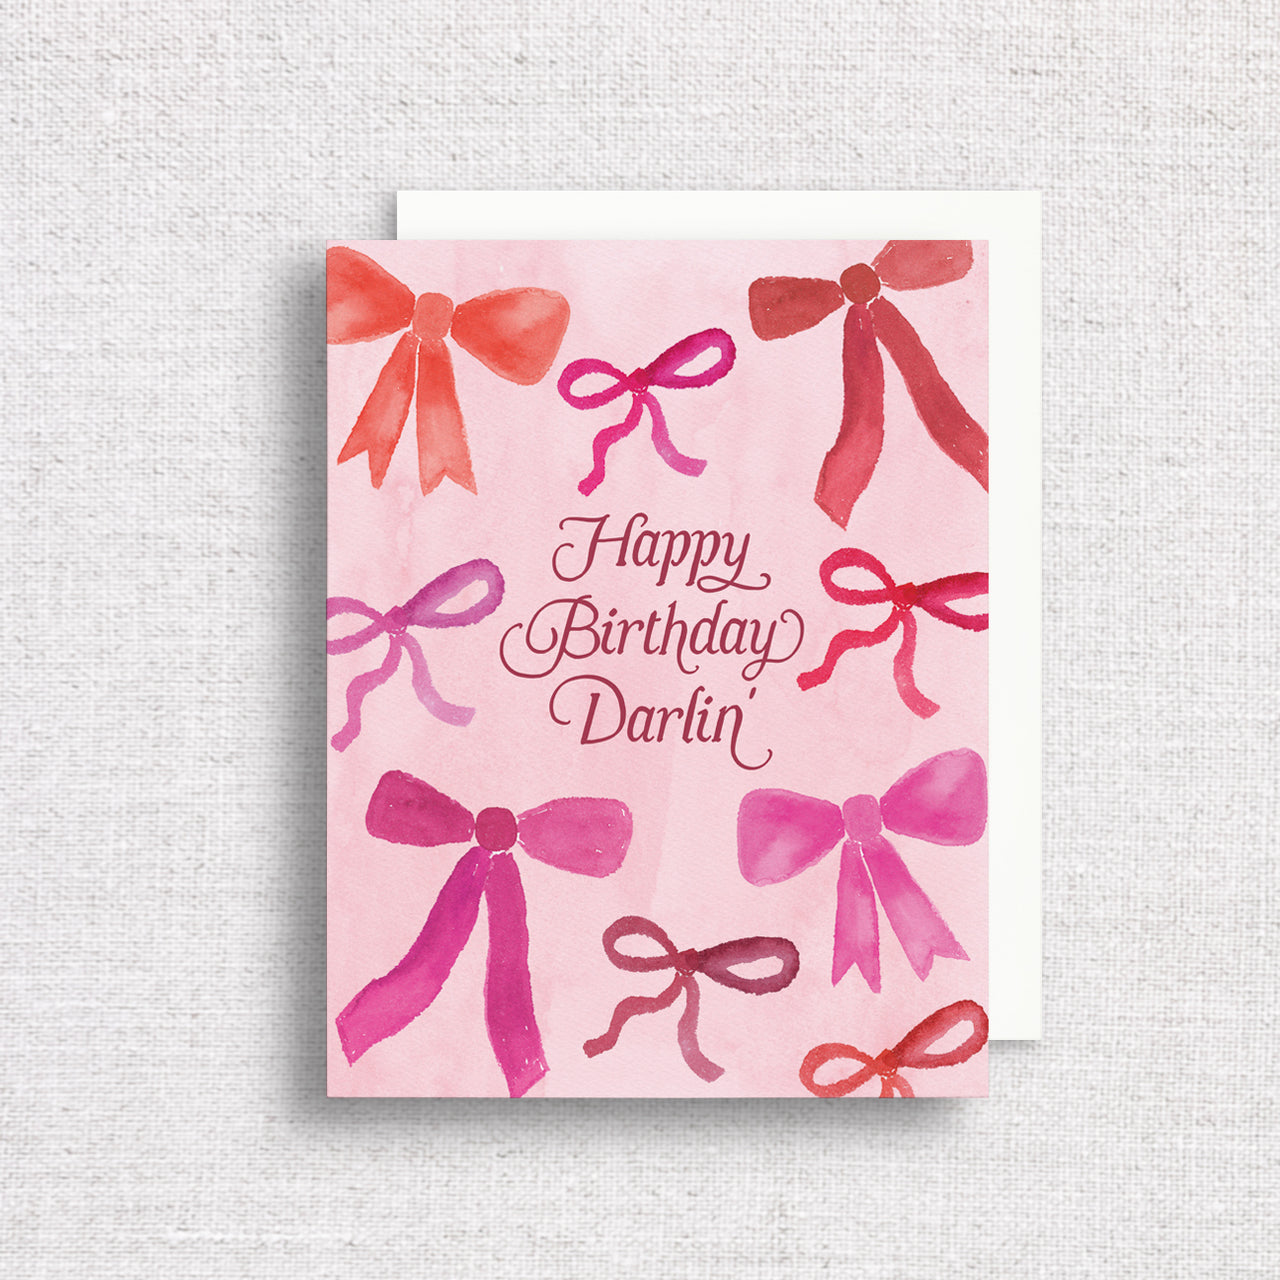 Happy Birthday Darlin' Greeting Card by Gert & Co